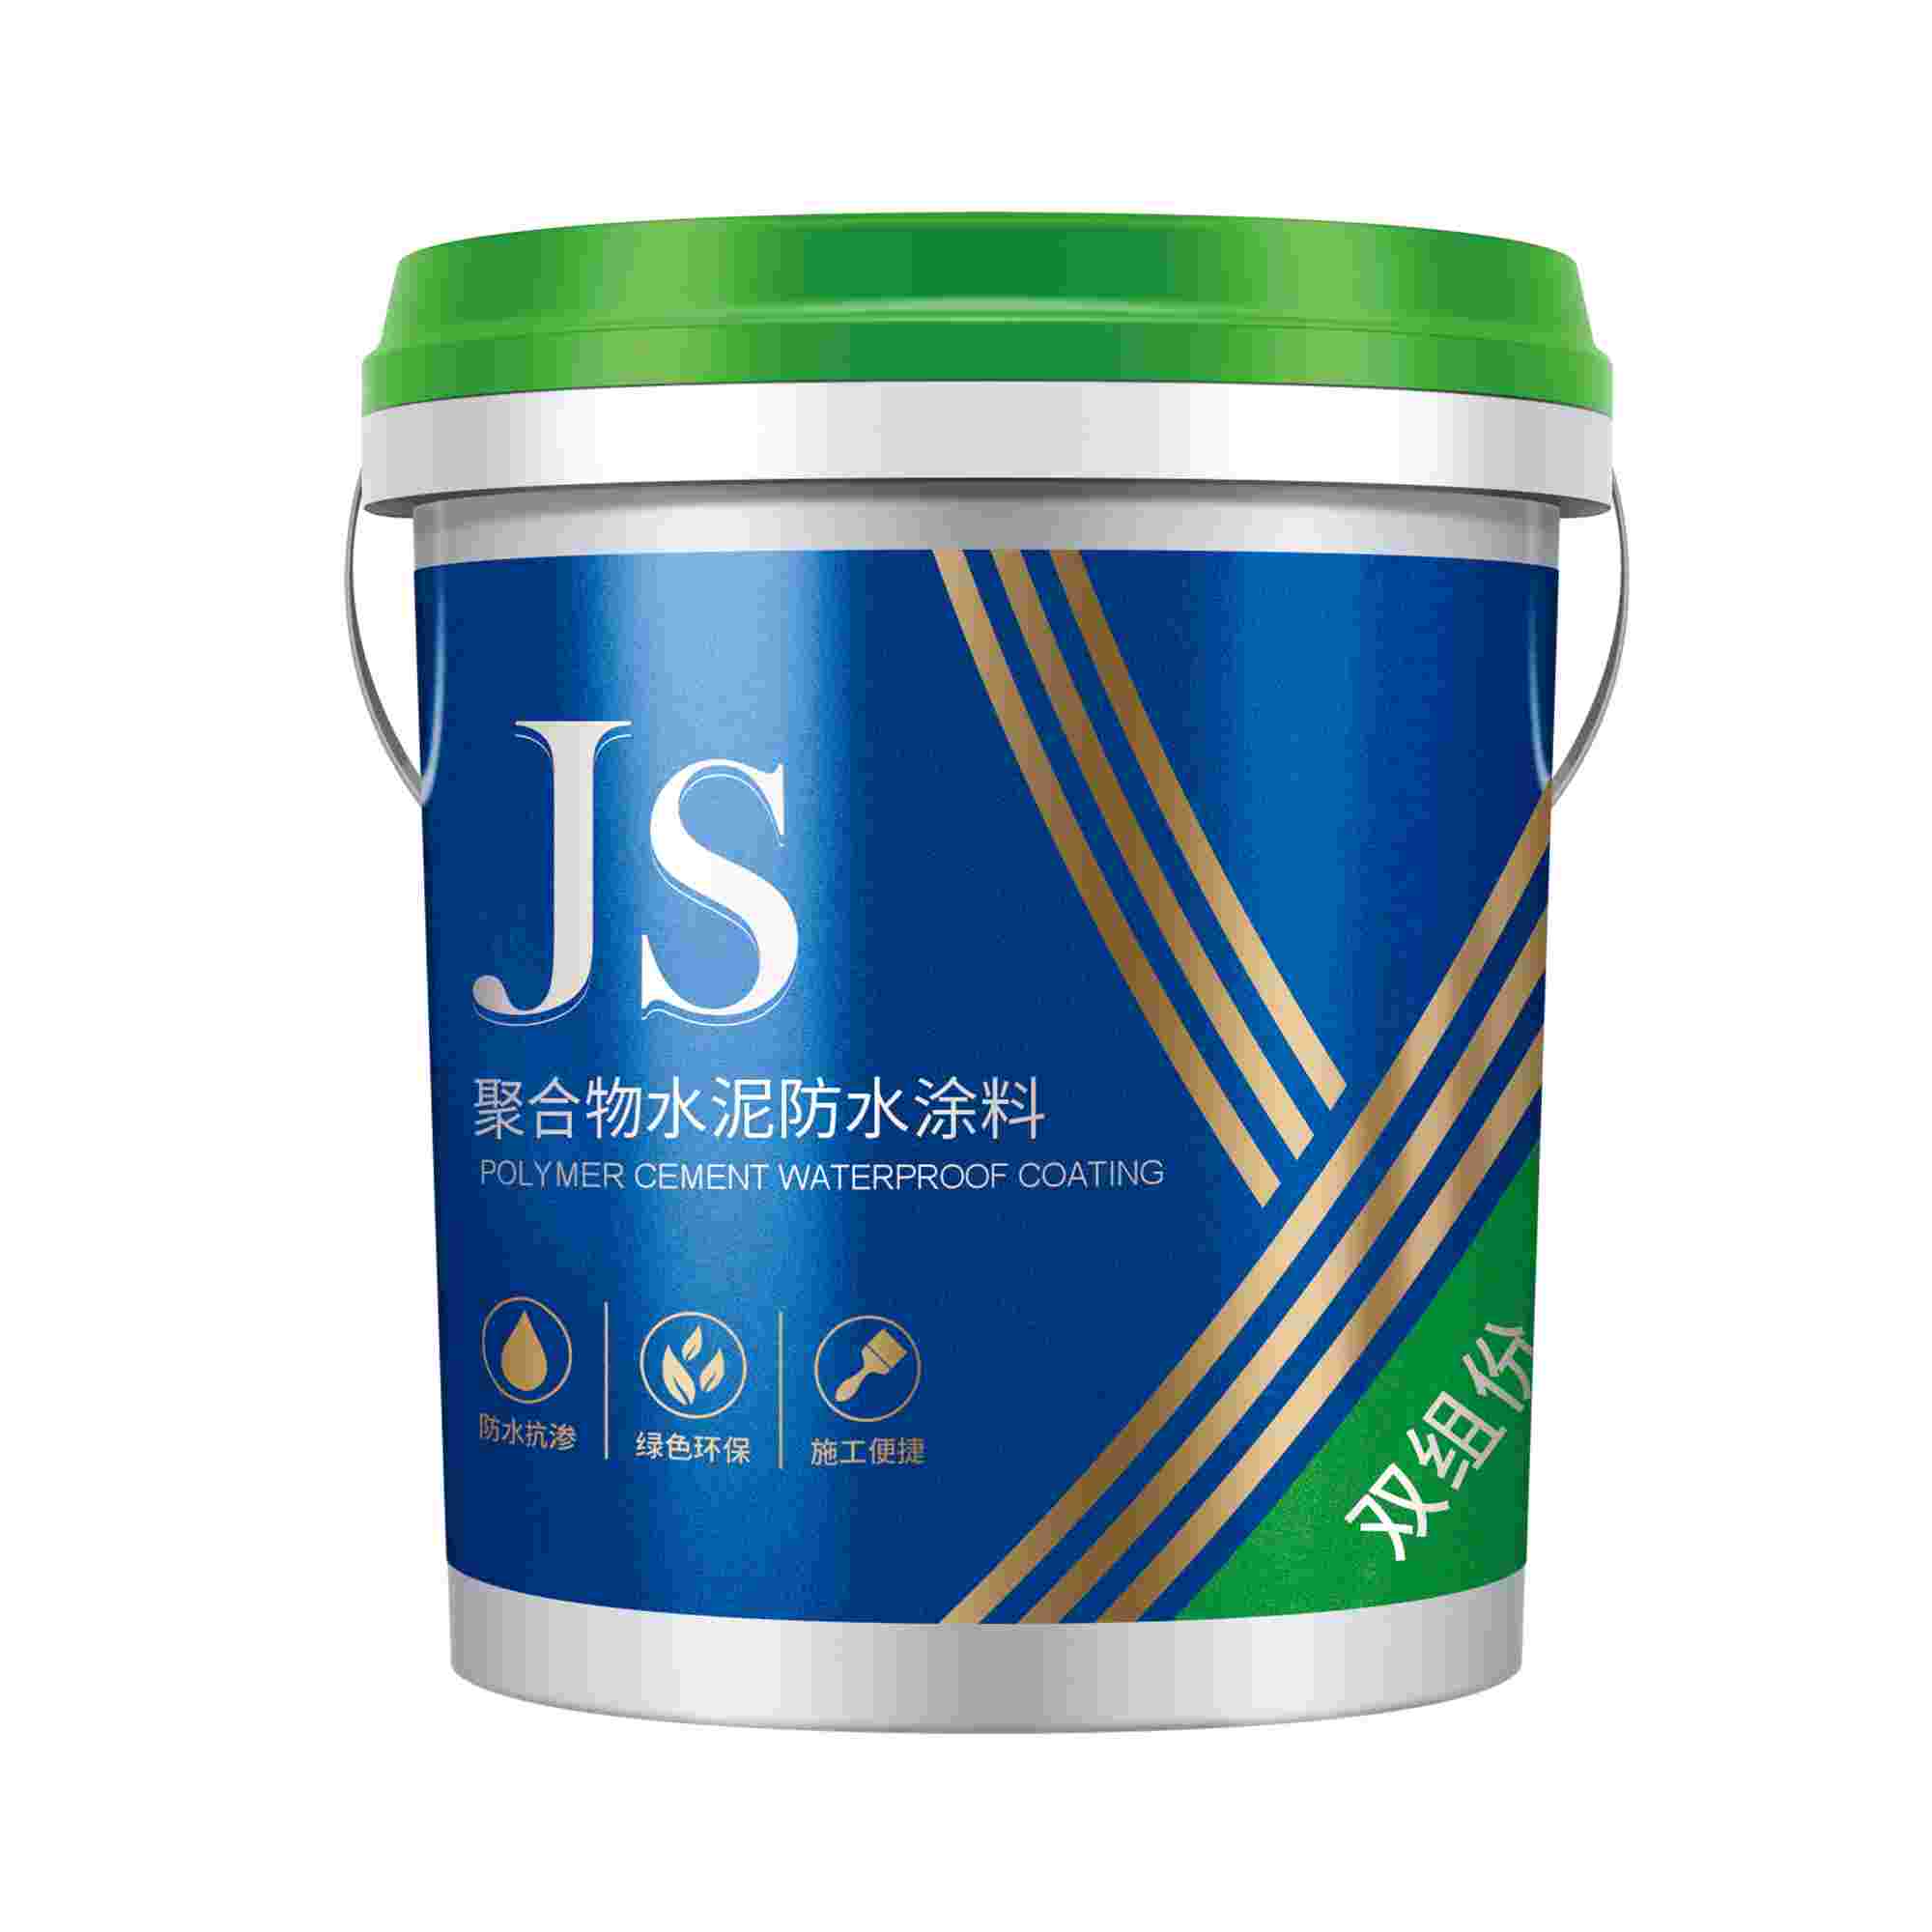 JS聚合物水泥防水涂料-双-国标